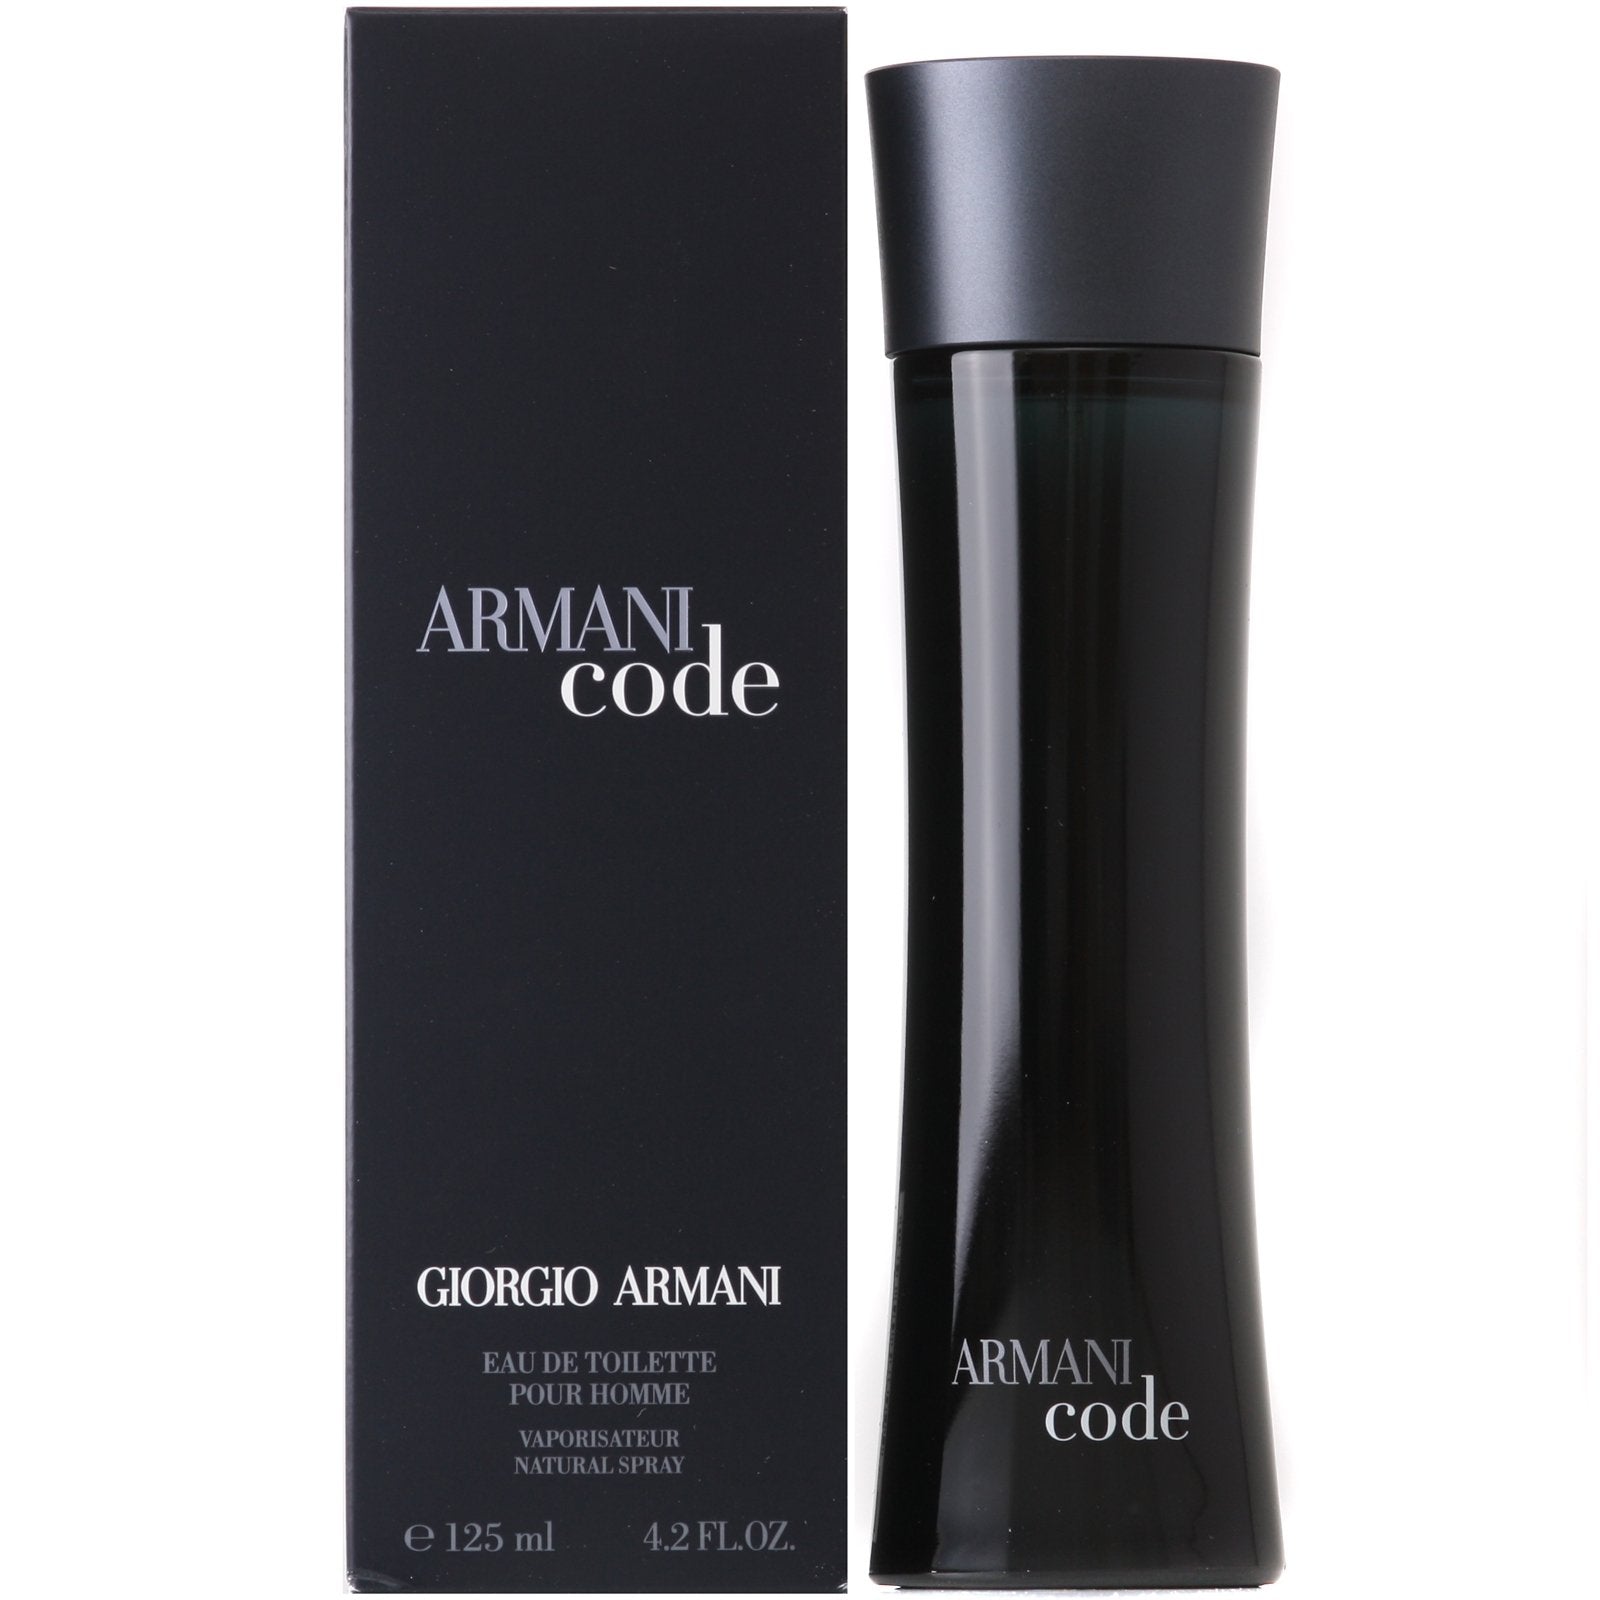 GIORGIO ARMANI - Armani Code para hombre / 125 ml Eau De Toilette Spray